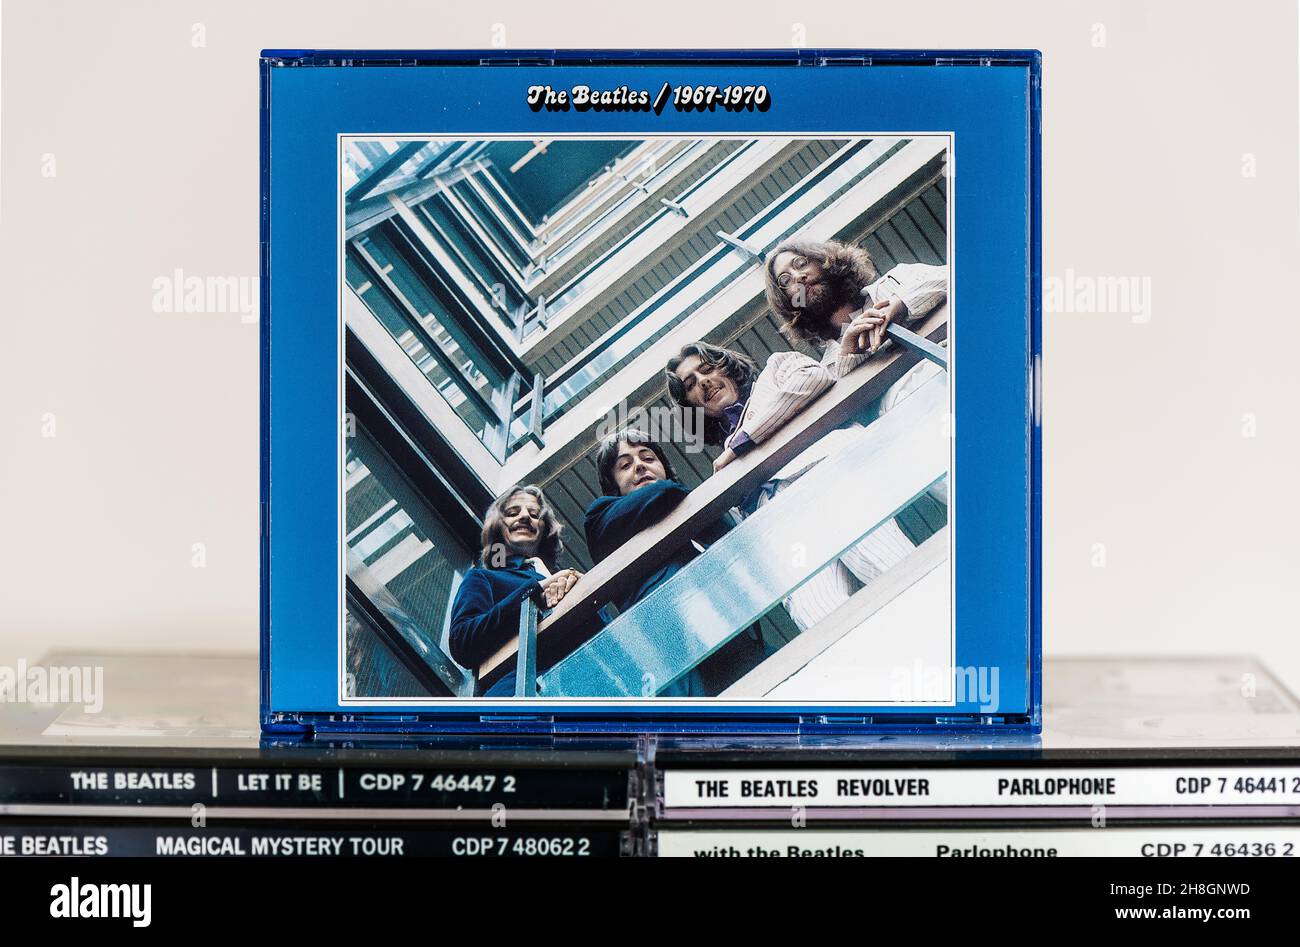 EMI CD  Disc - The Beatles / 1967-1970. Stock Photo